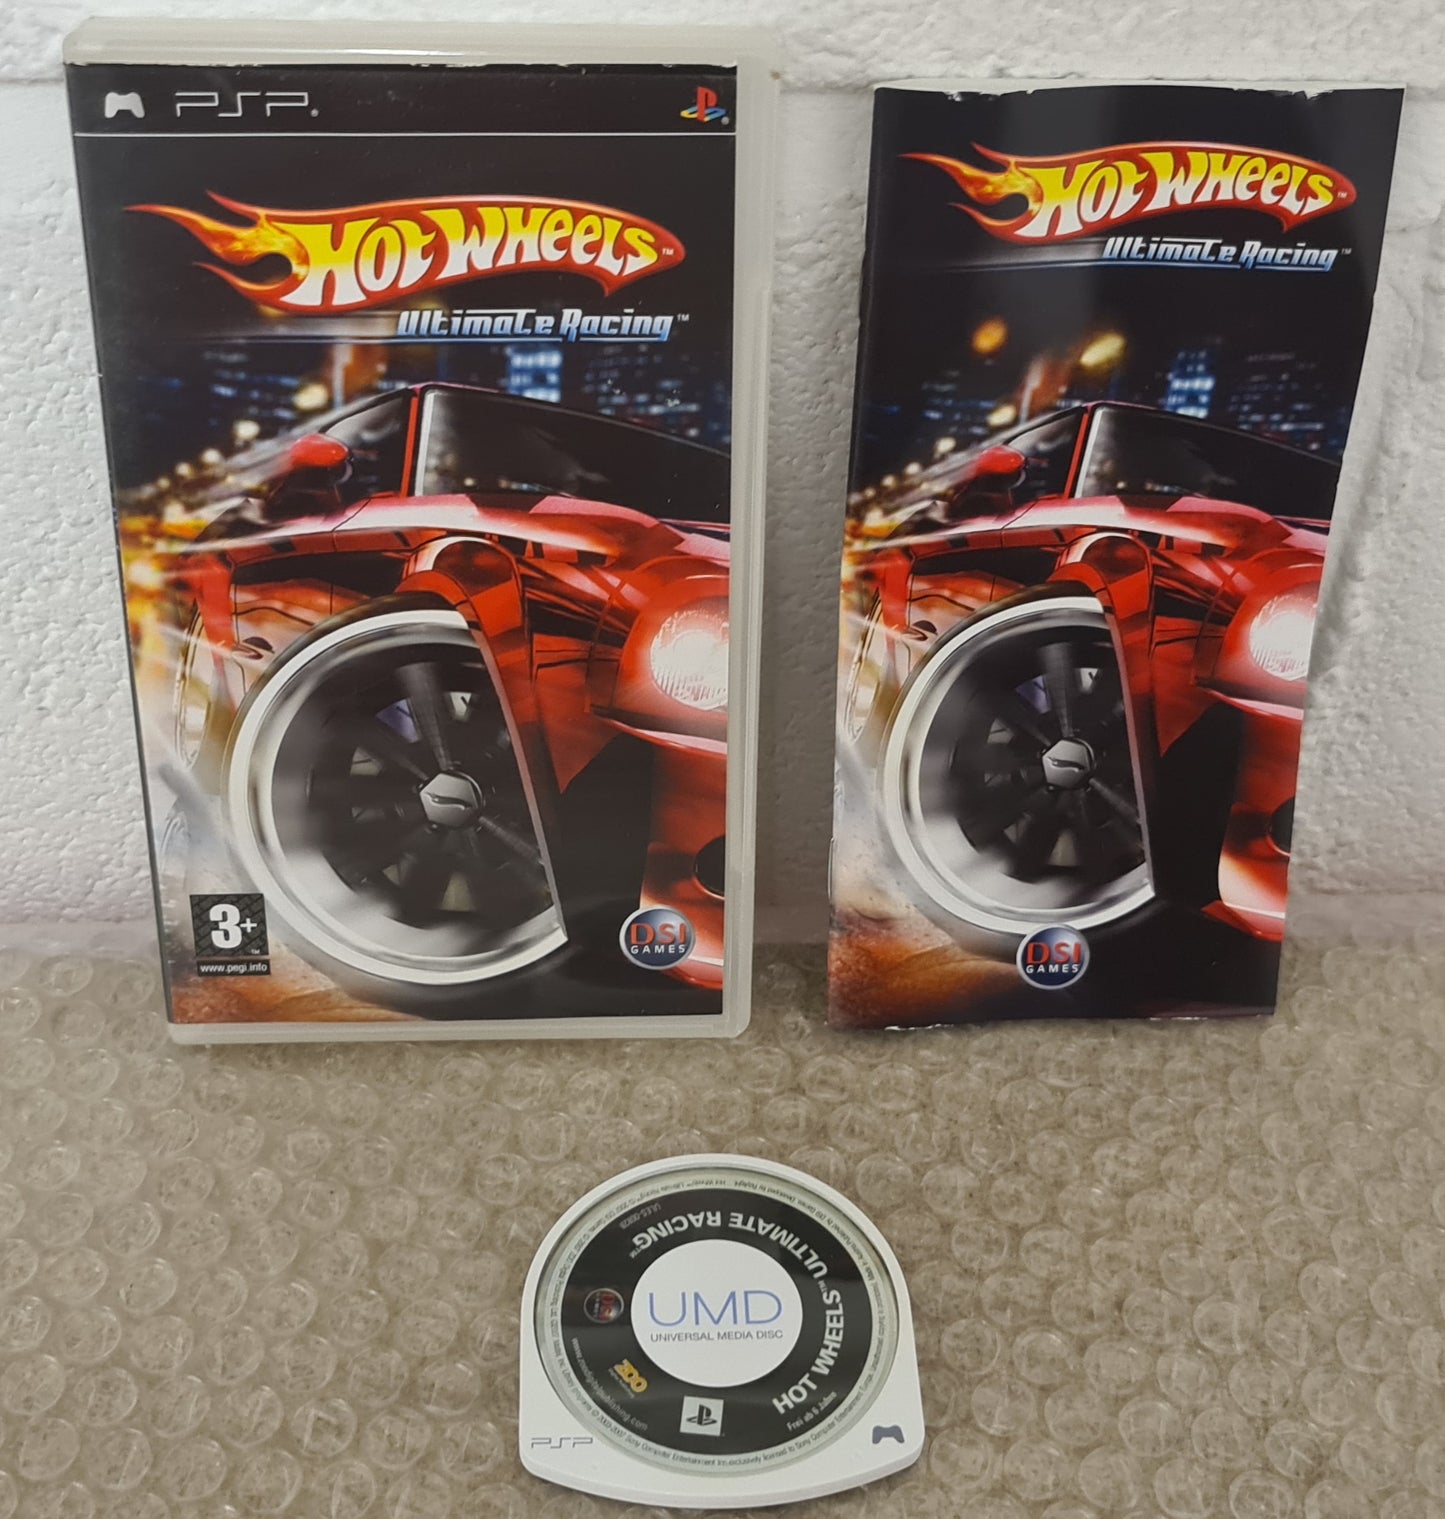 Hot Wheels Ultimate Racing Sony PSP Game